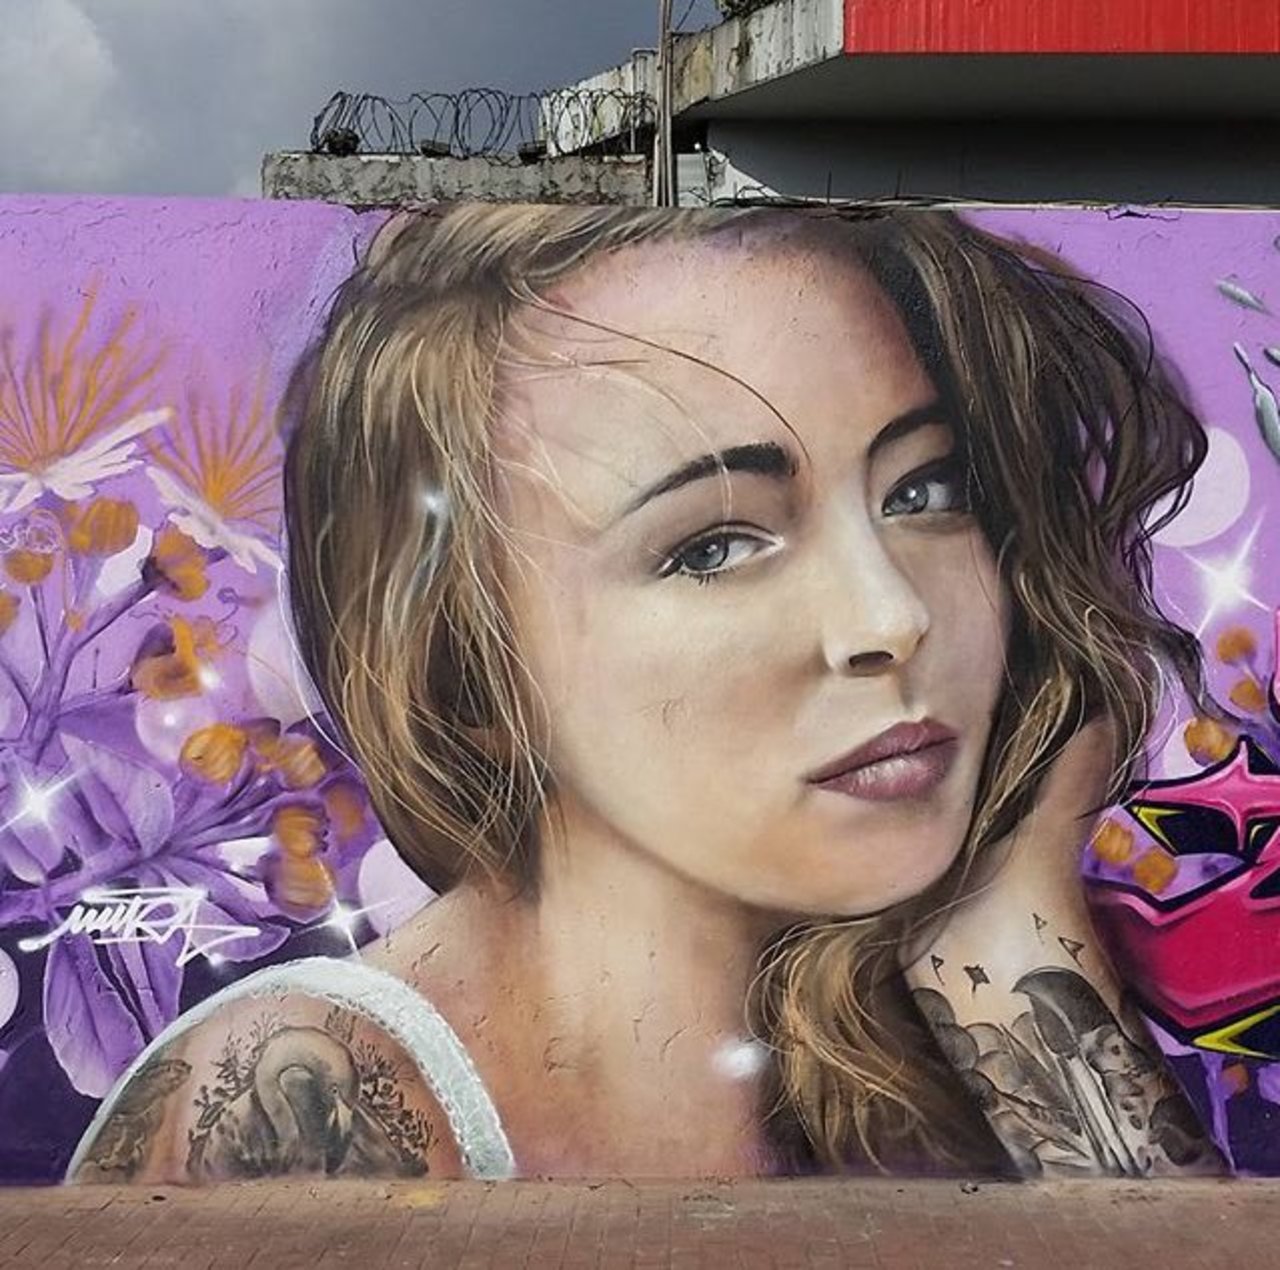 New Street Art by Mantarea 

#art #graffiti #mural #streetart https://t.co/ulKiyvTuiC